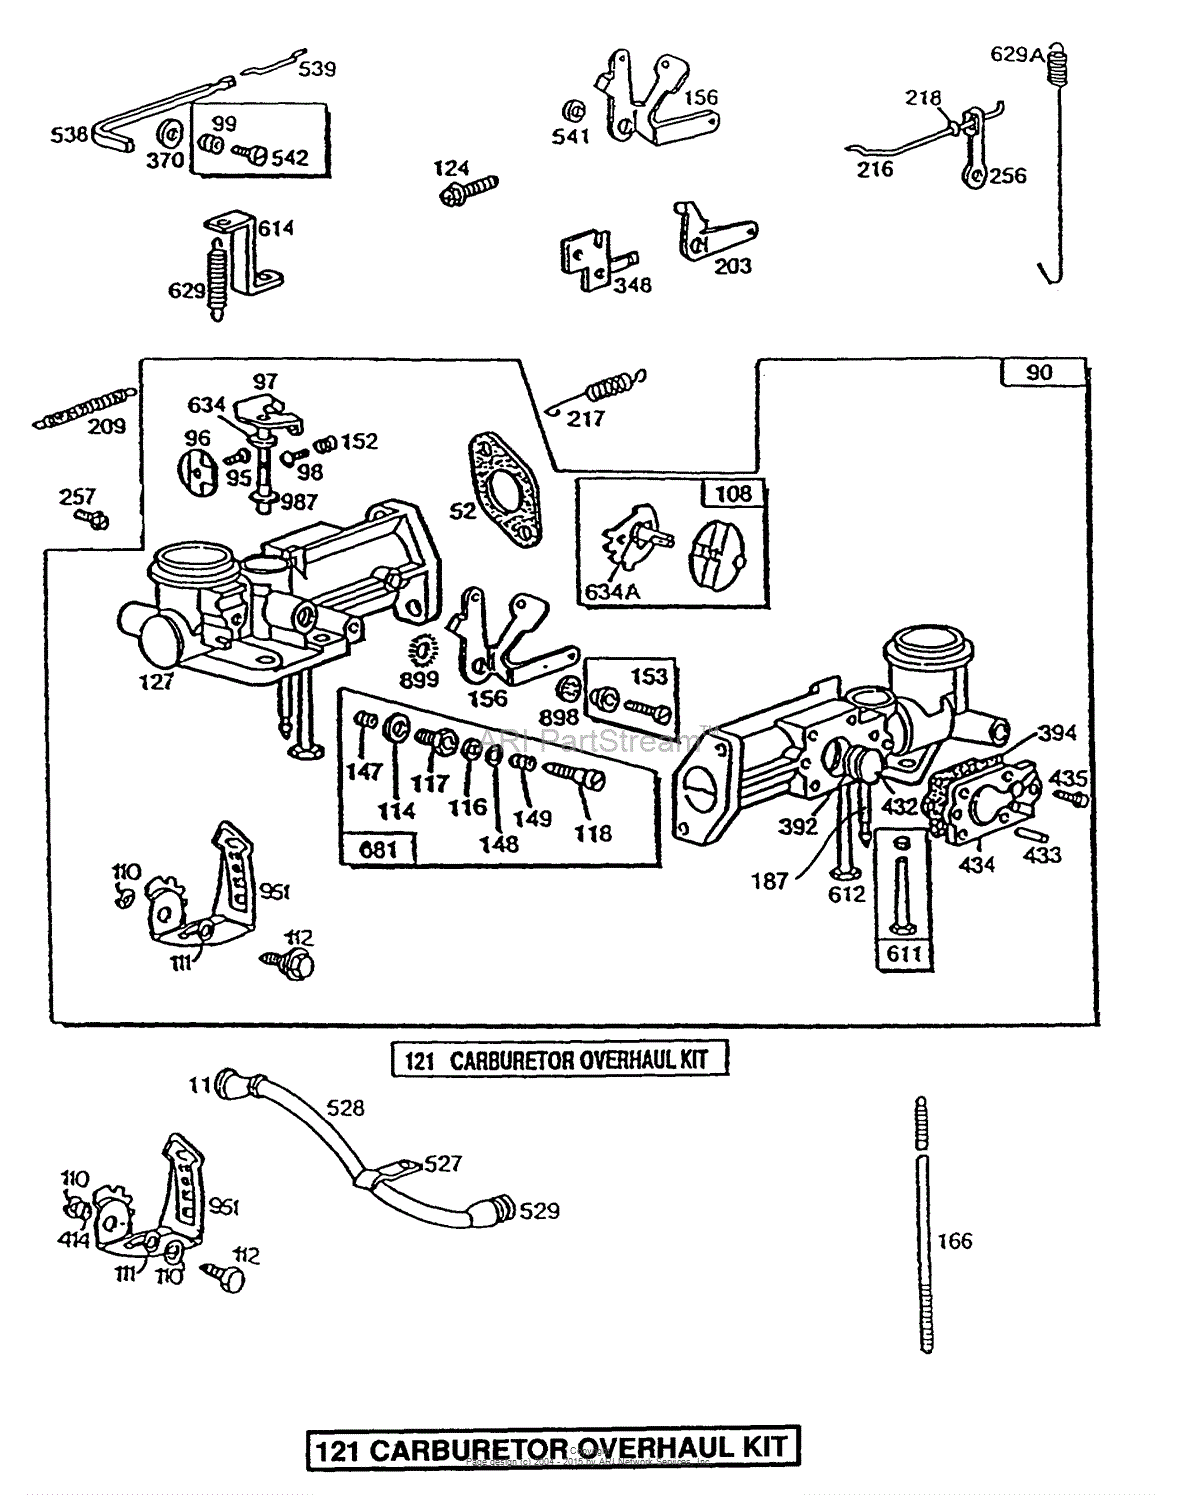 Briggs And Stratton Carburetor Parts Diagram General Wiring Diagram